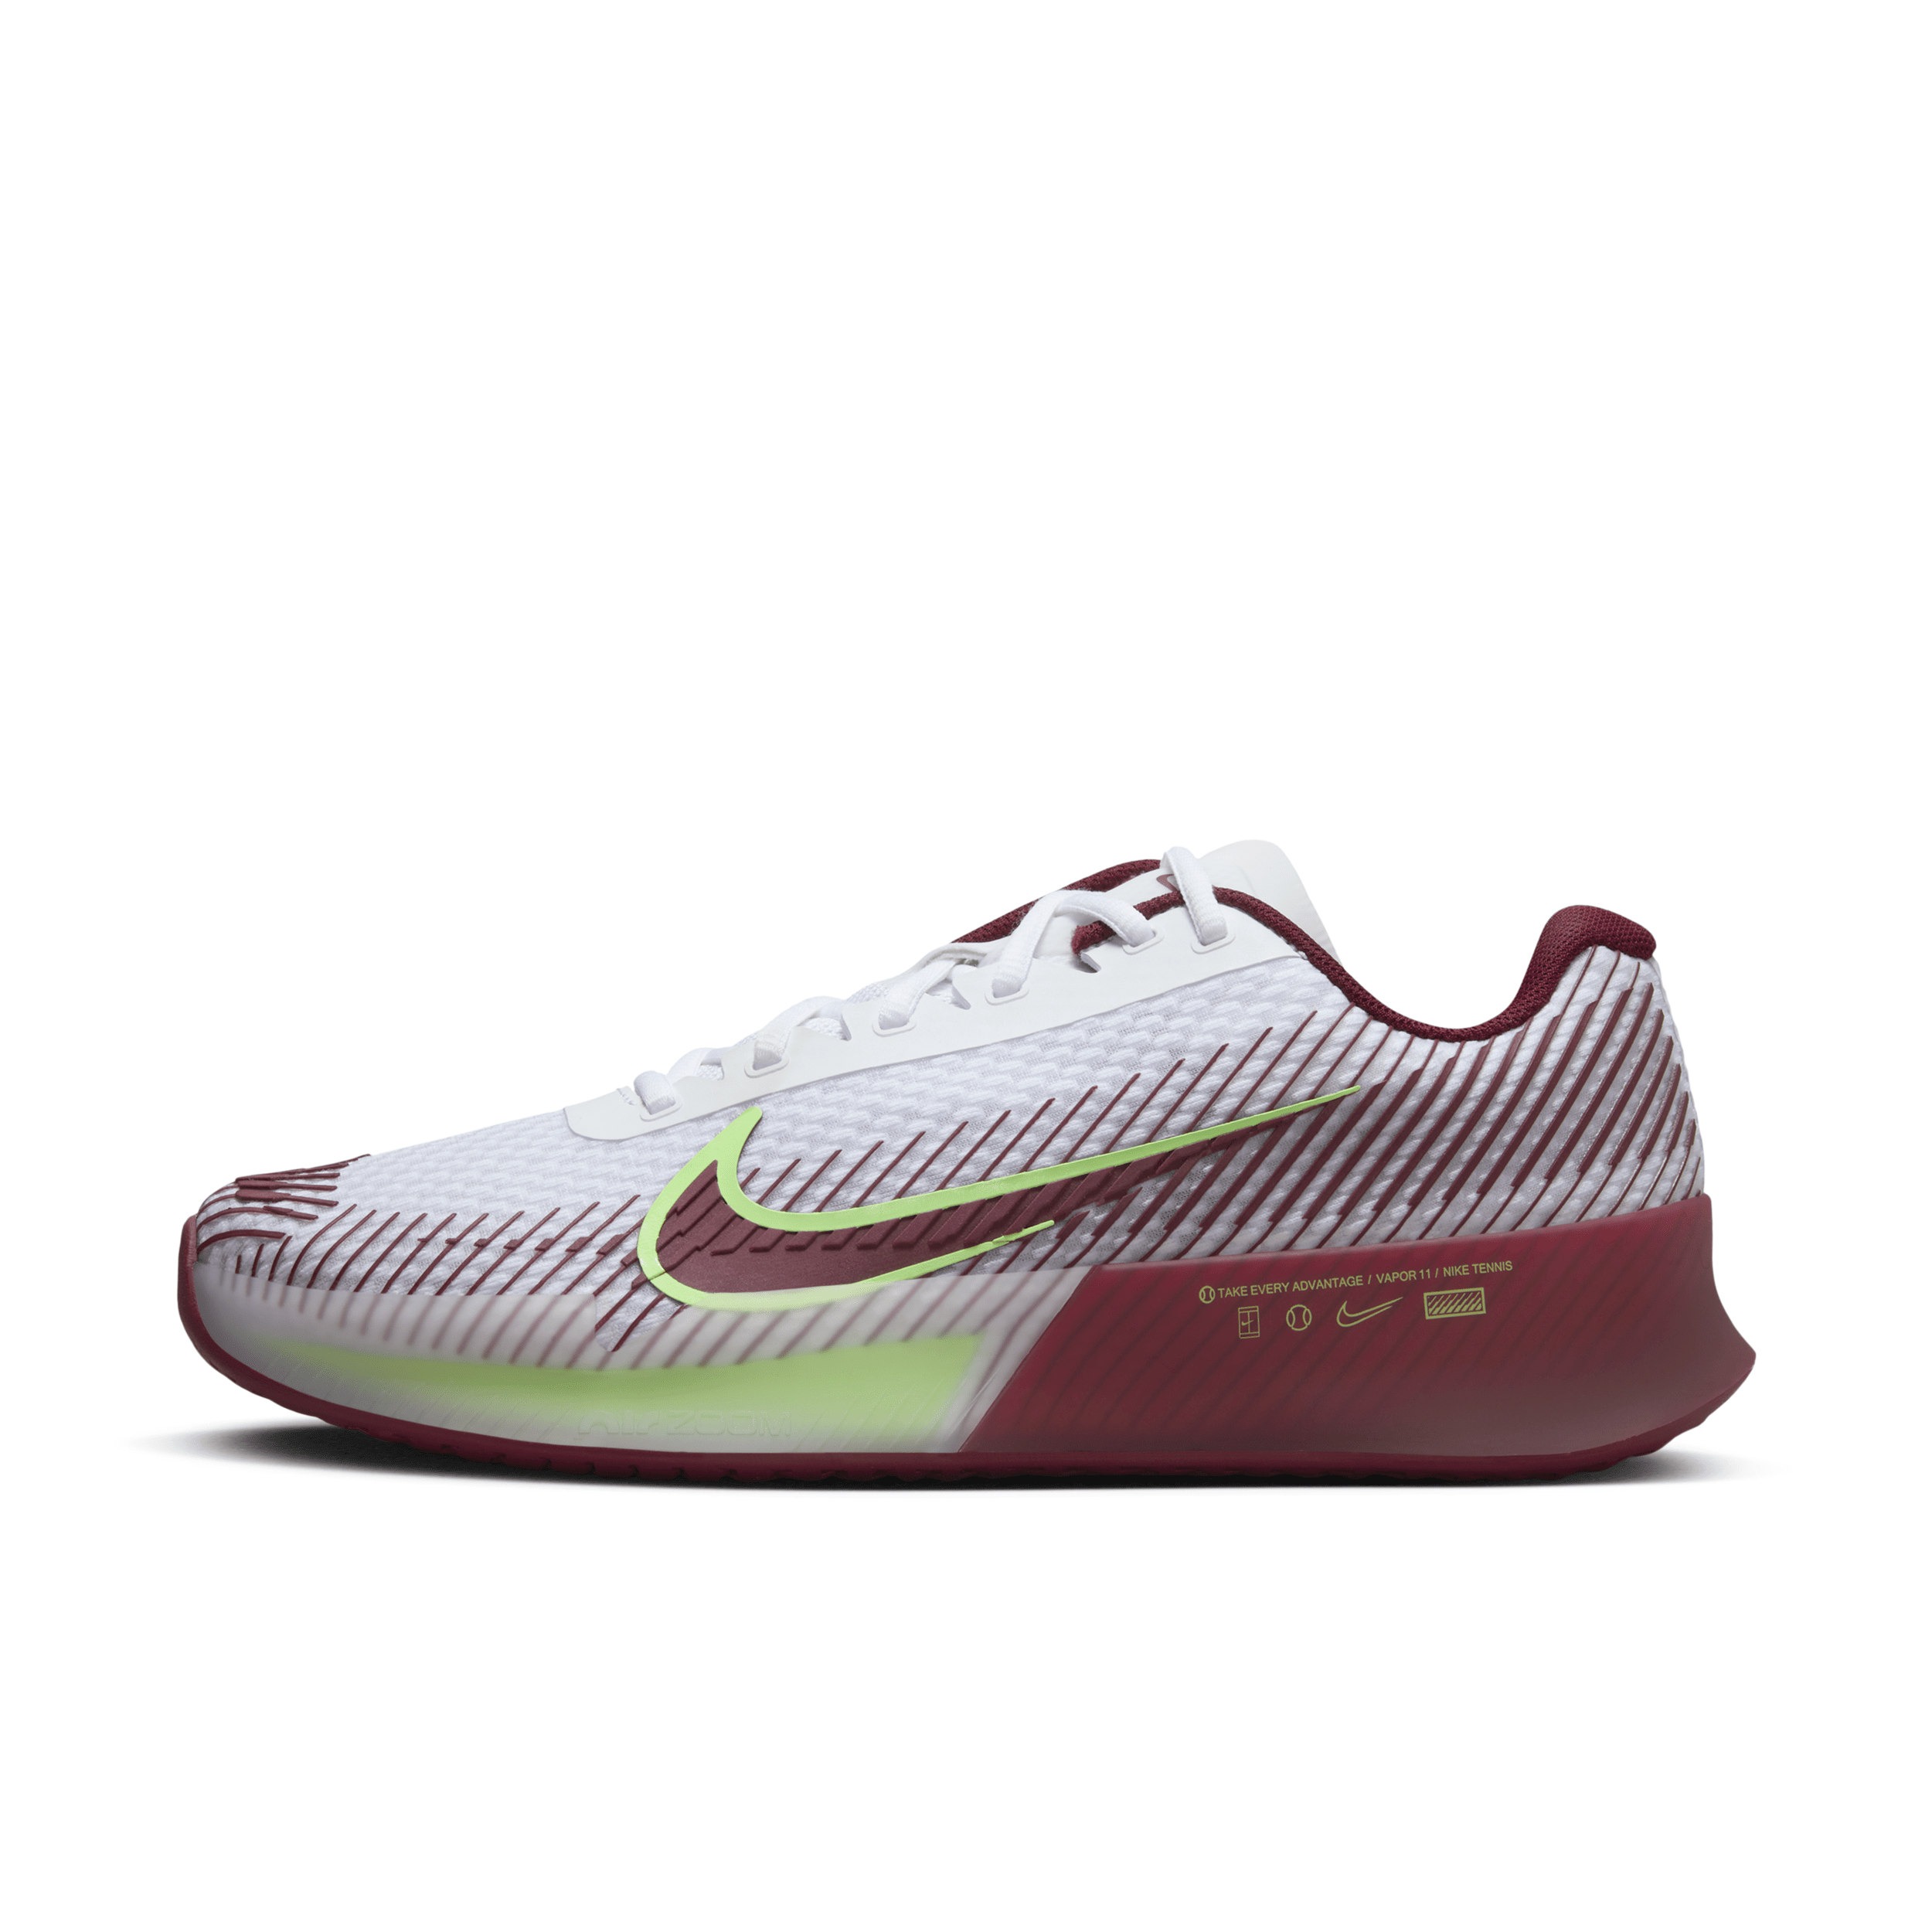 Nike Men's Court Air Zoom Vapor 11 Hard Court Tennis Shoes In White